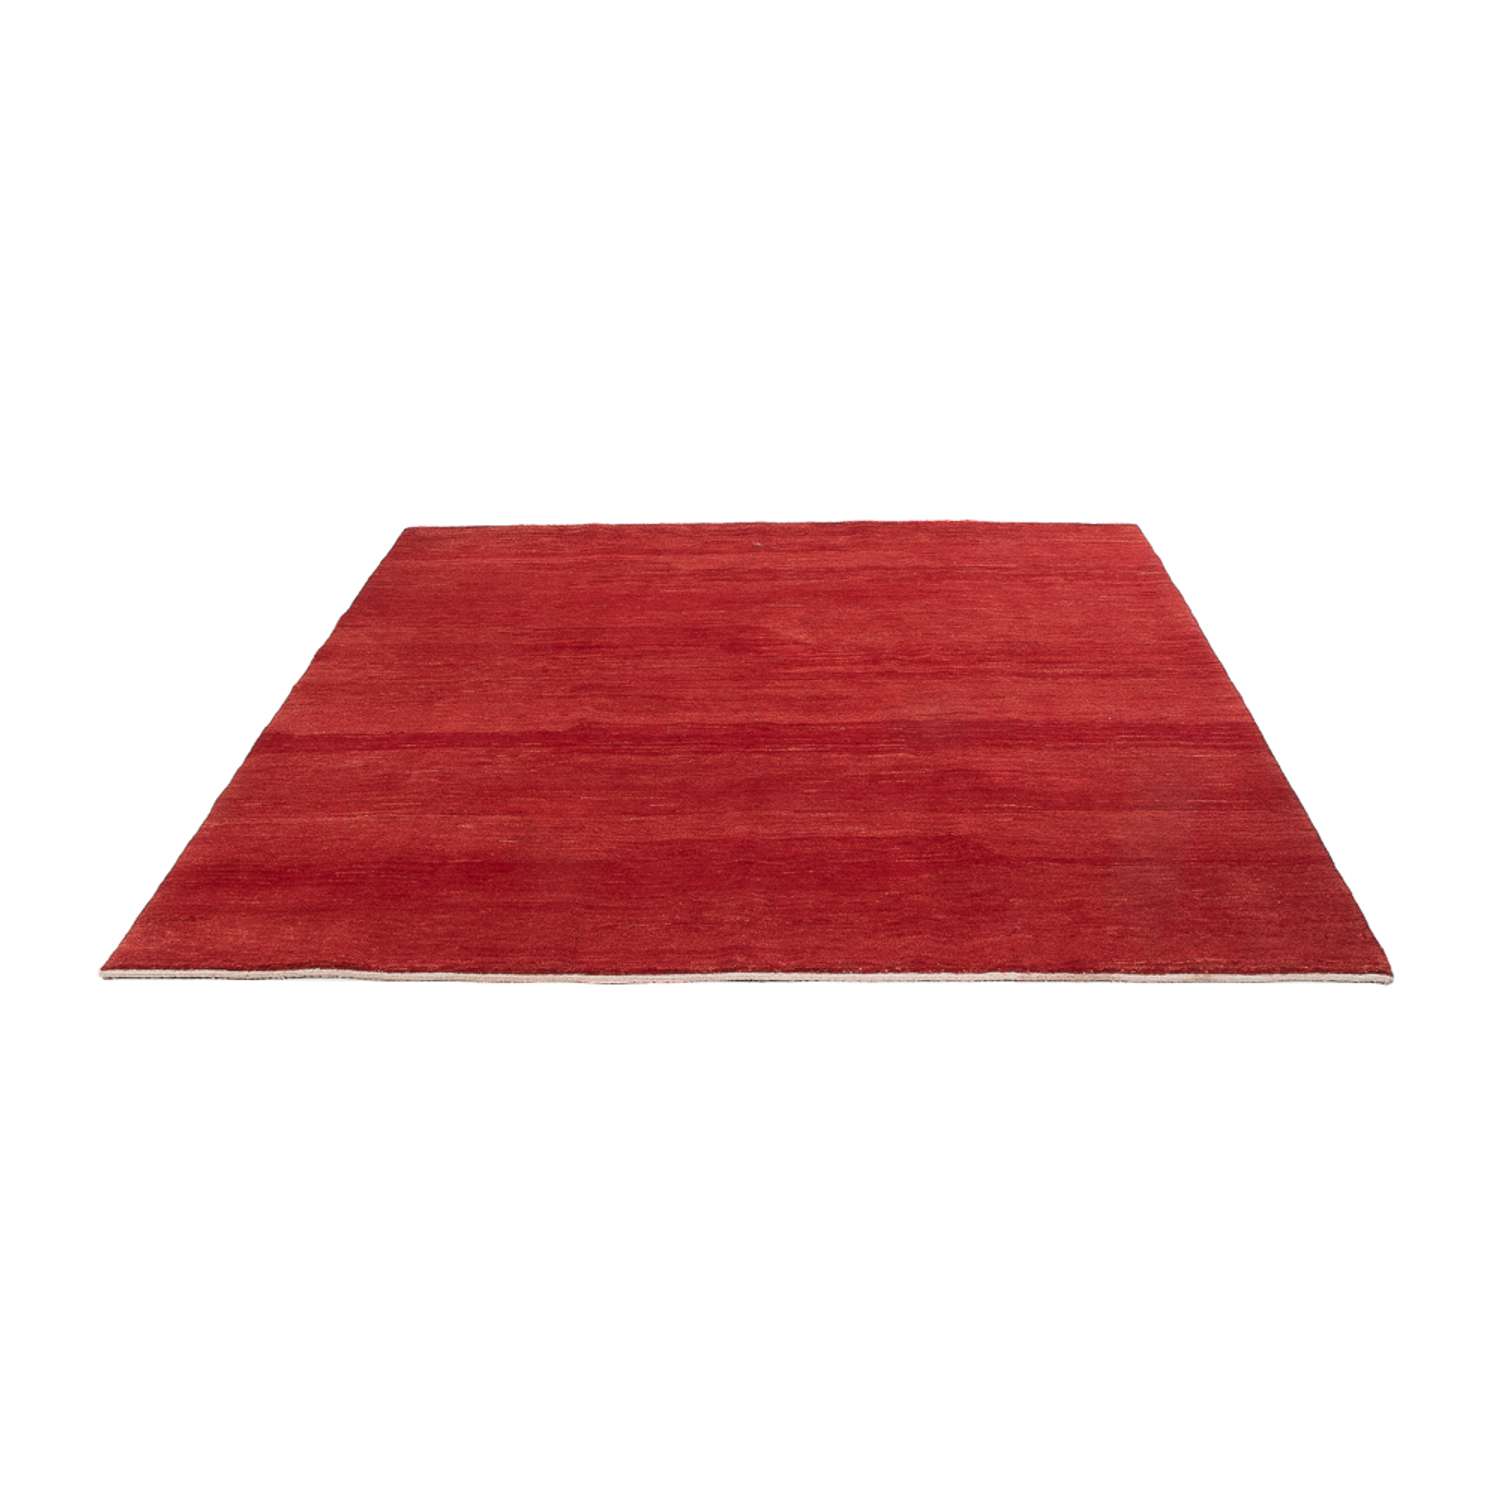 Gabbeh-matta - persisk kvadrat  - 210 x 210 cm - röd